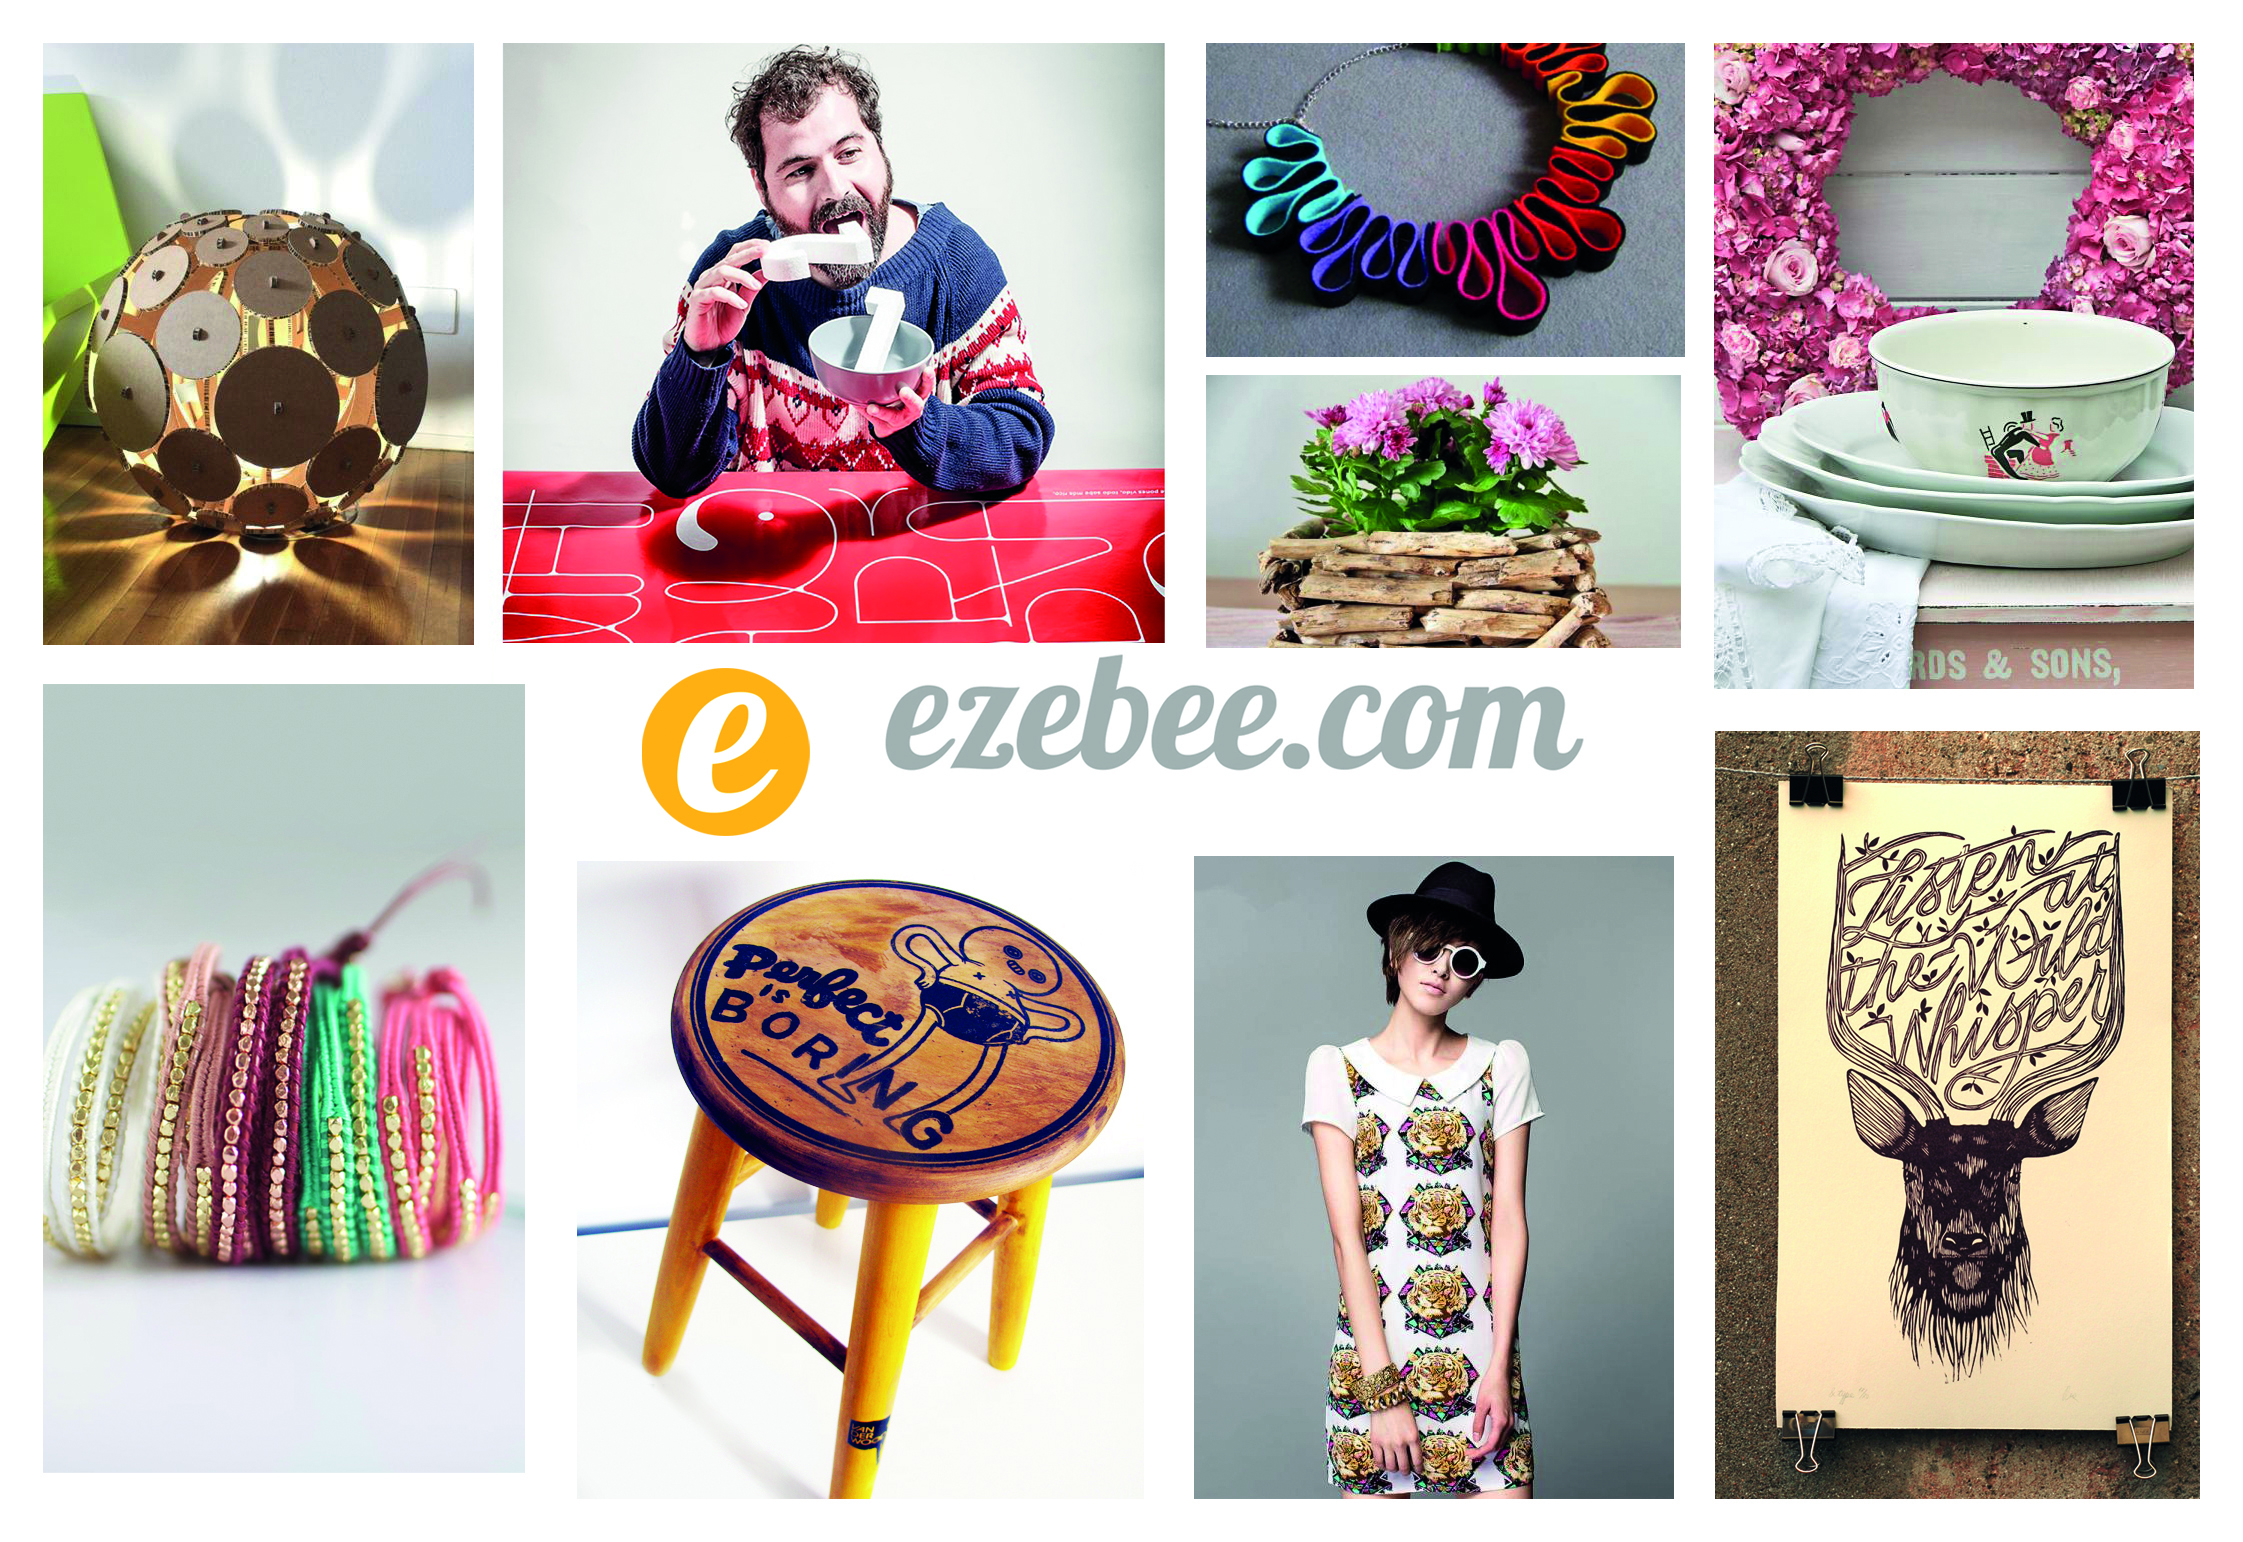 Ezebee.com- A Hassle-free Online Marketplace Review| cherryontopblog.com